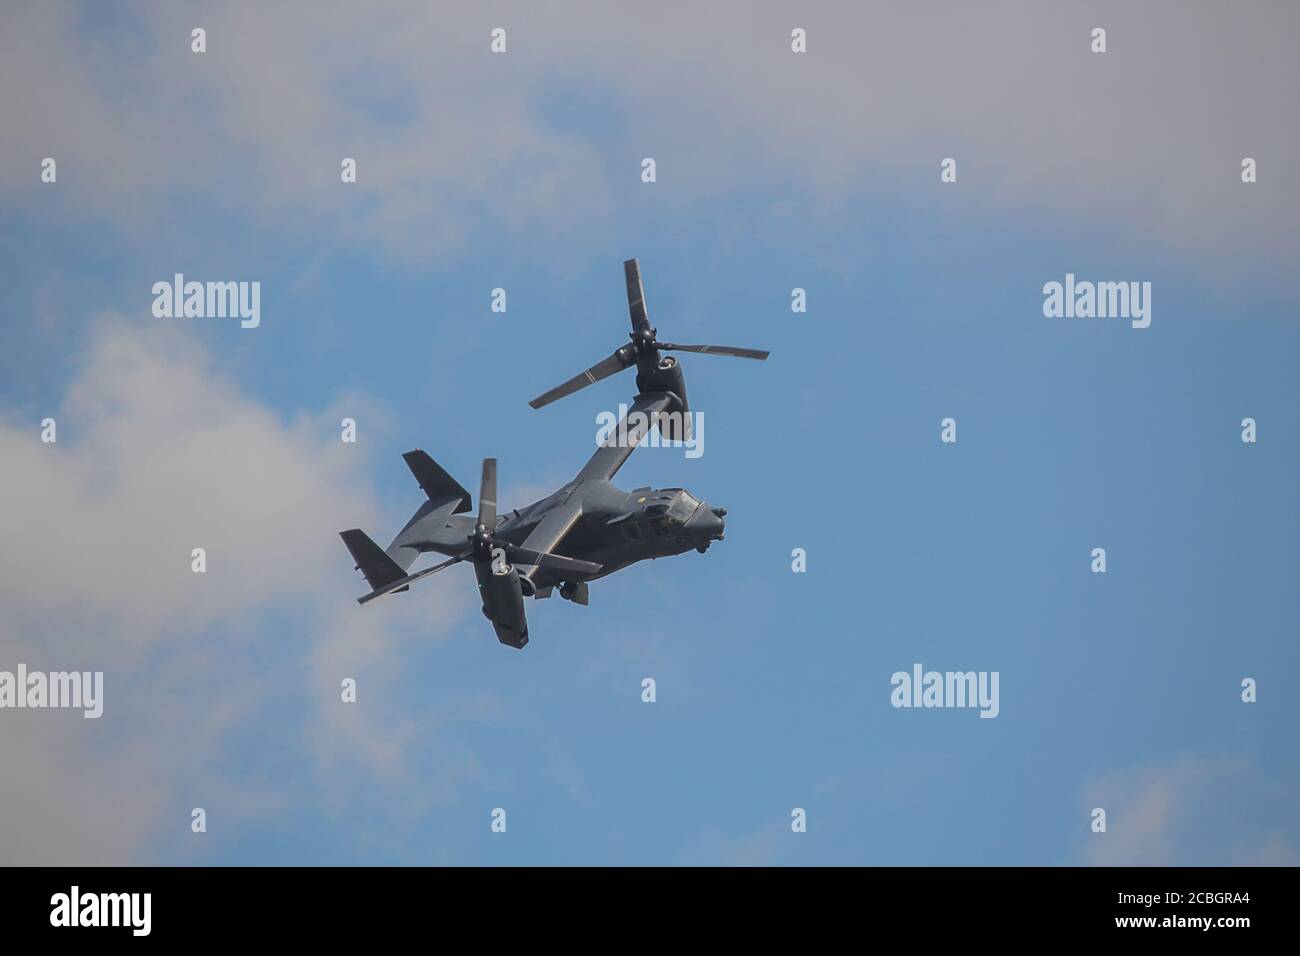 A Bell-Boeing CV-22B Osprey tiltrotor military aircraft Stock Photo